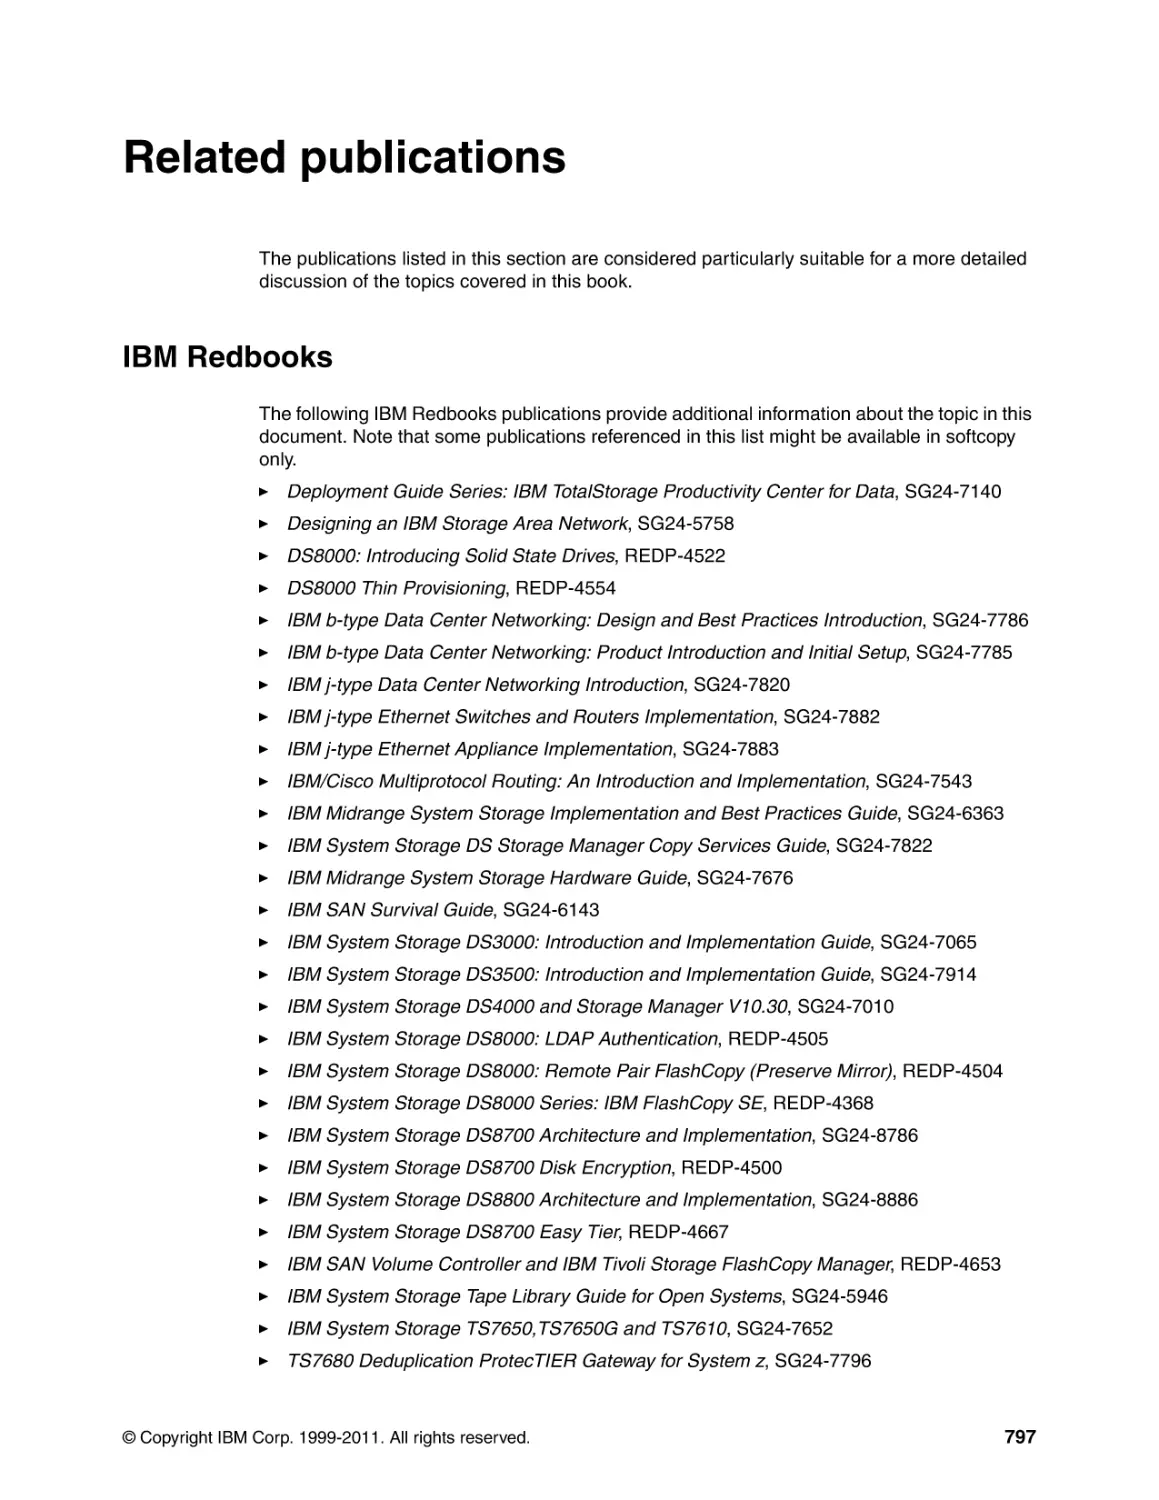 Related publications
IBM Redbooks